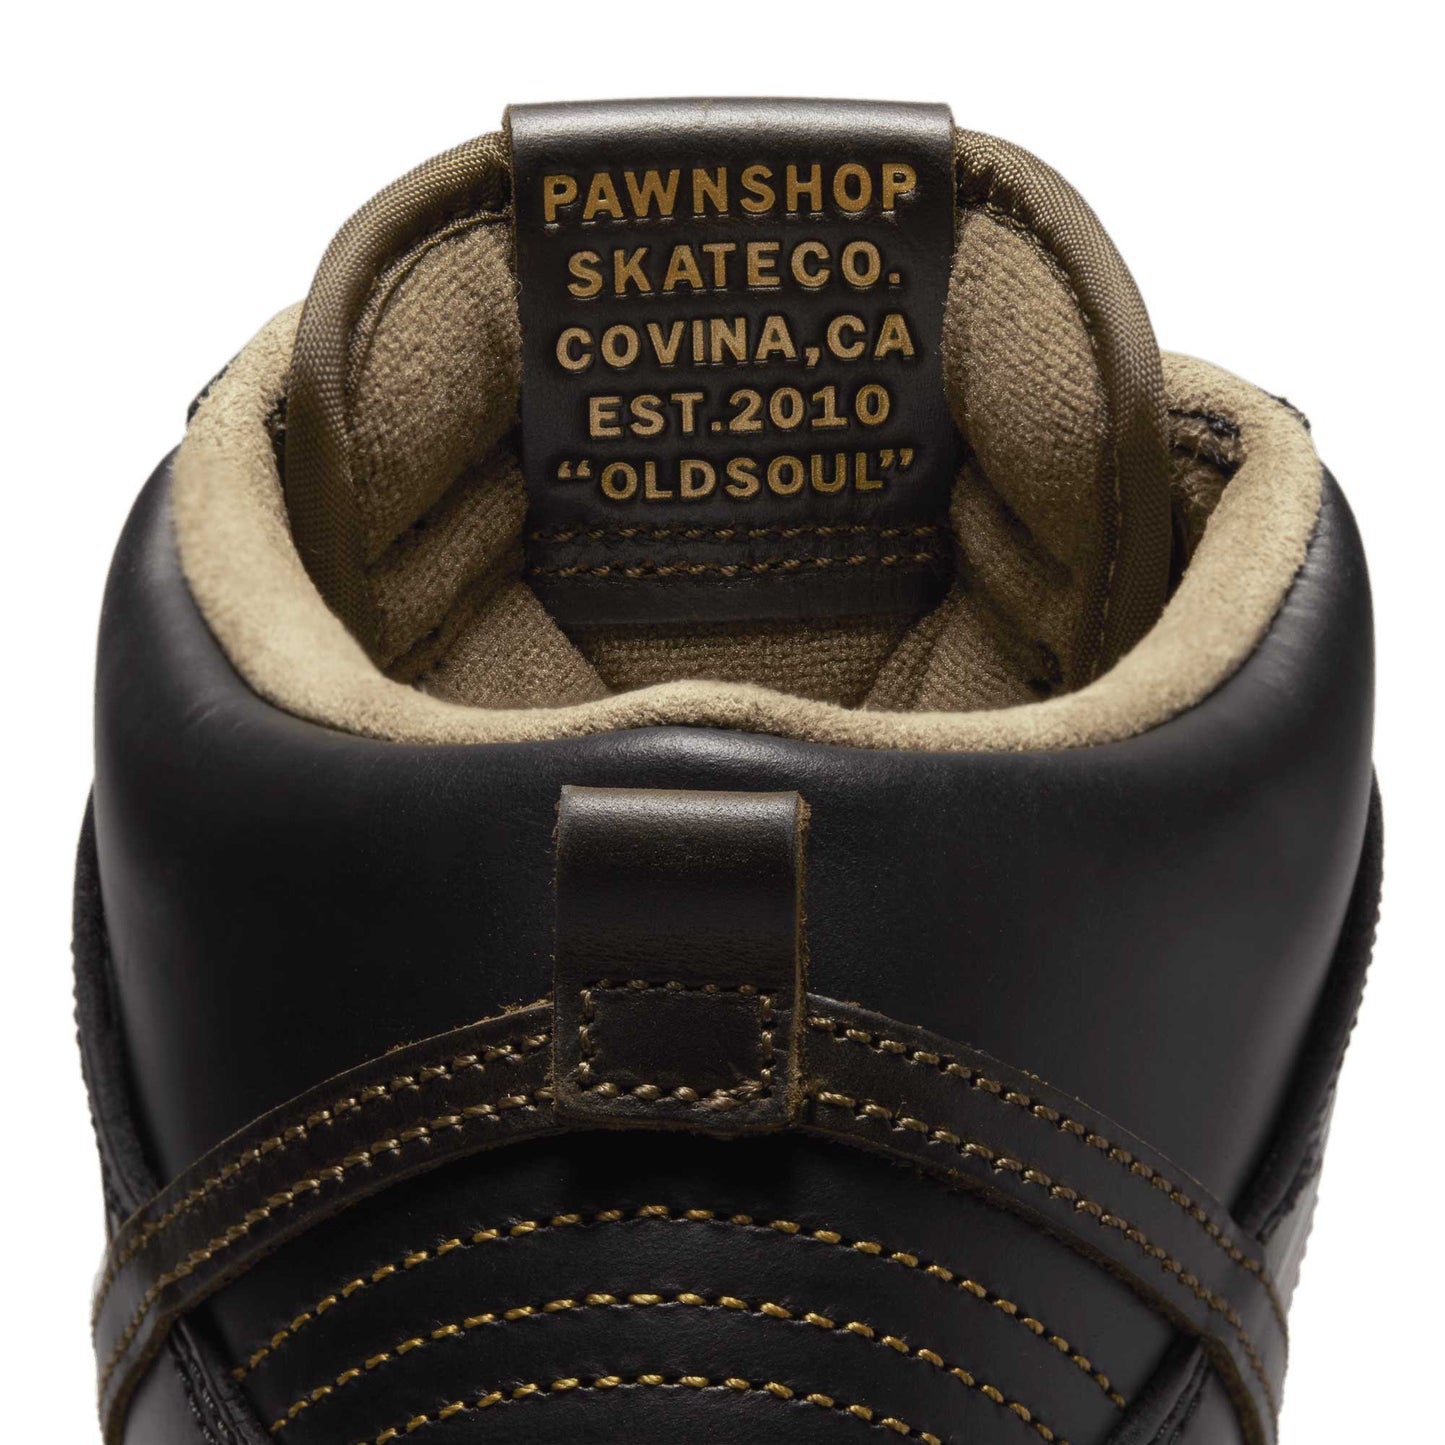 Nike SB Dunk High OG Pawnshop QS, black/black-metallic gold - Tiki Room Skateboards - 13